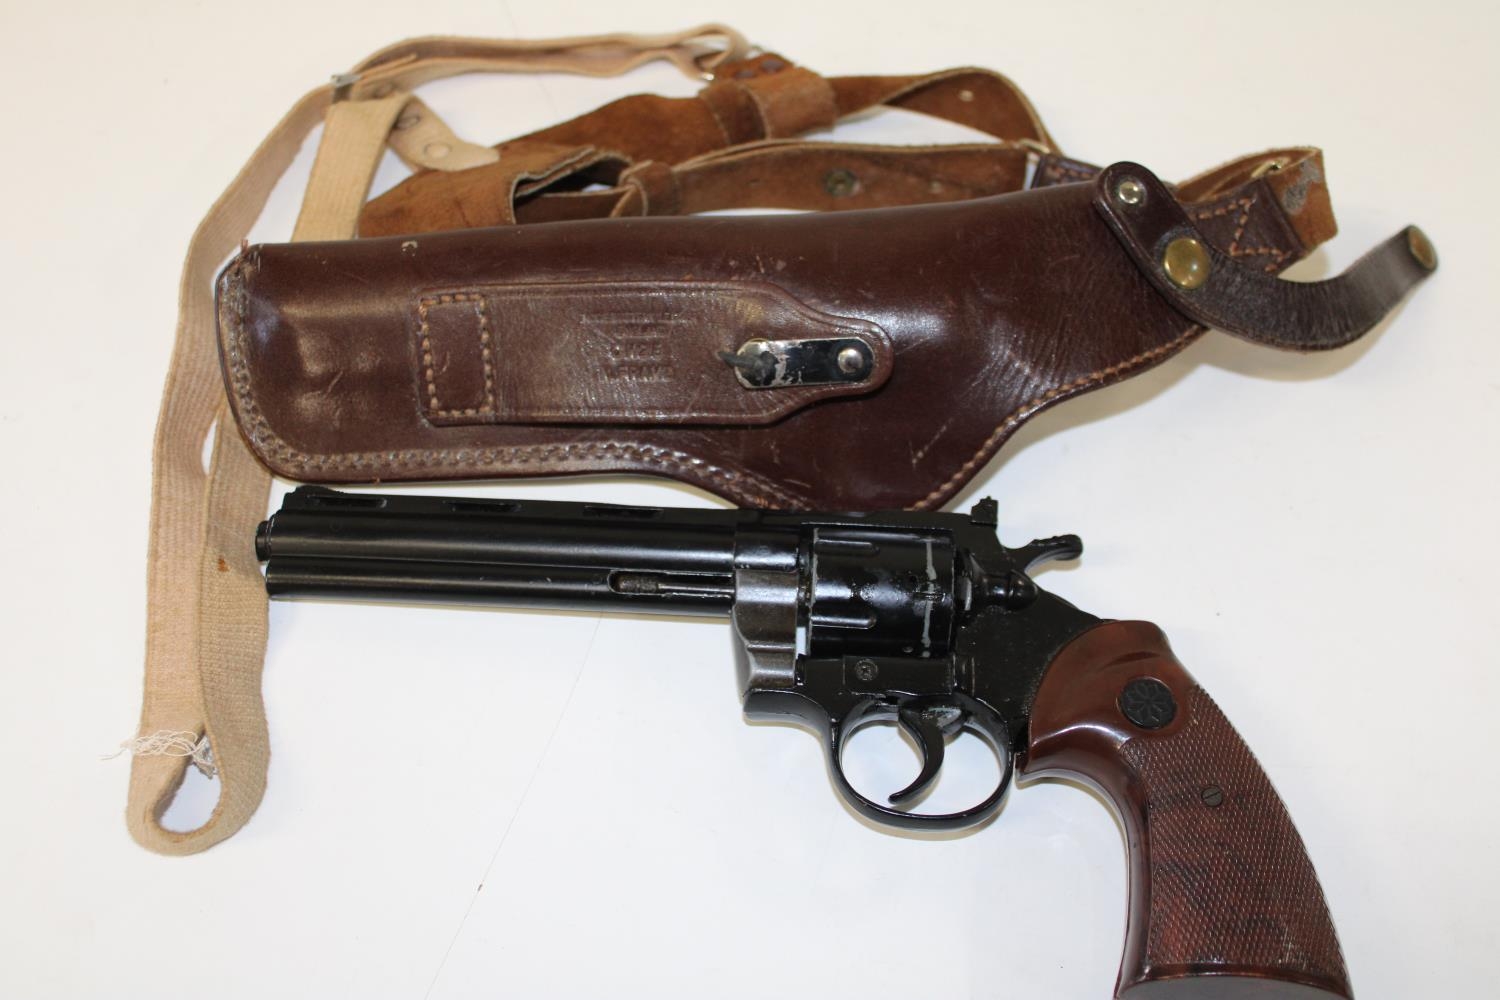 A replica gun & leather shoulder holster